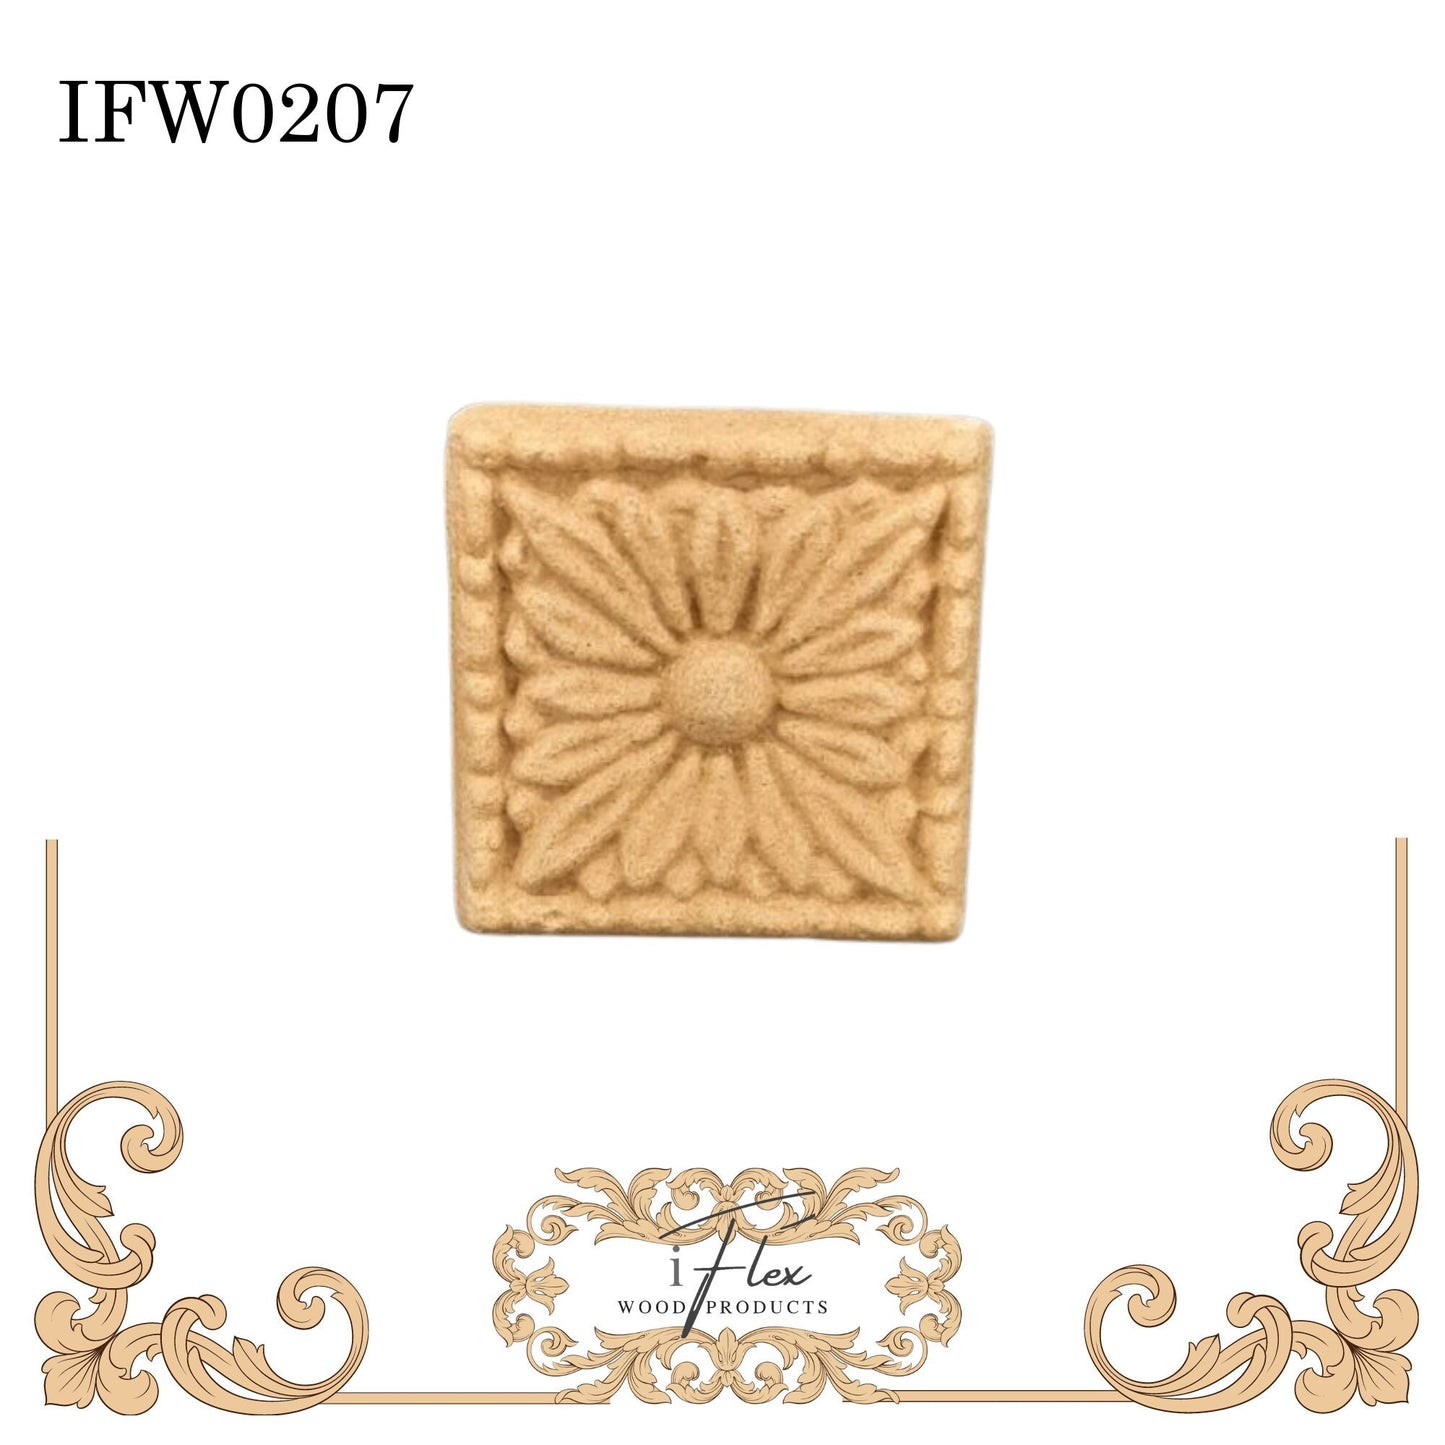 IFW 0207  iFlex Wood Products, Rosette, Centerpiece Flexible Pliable Embellishment